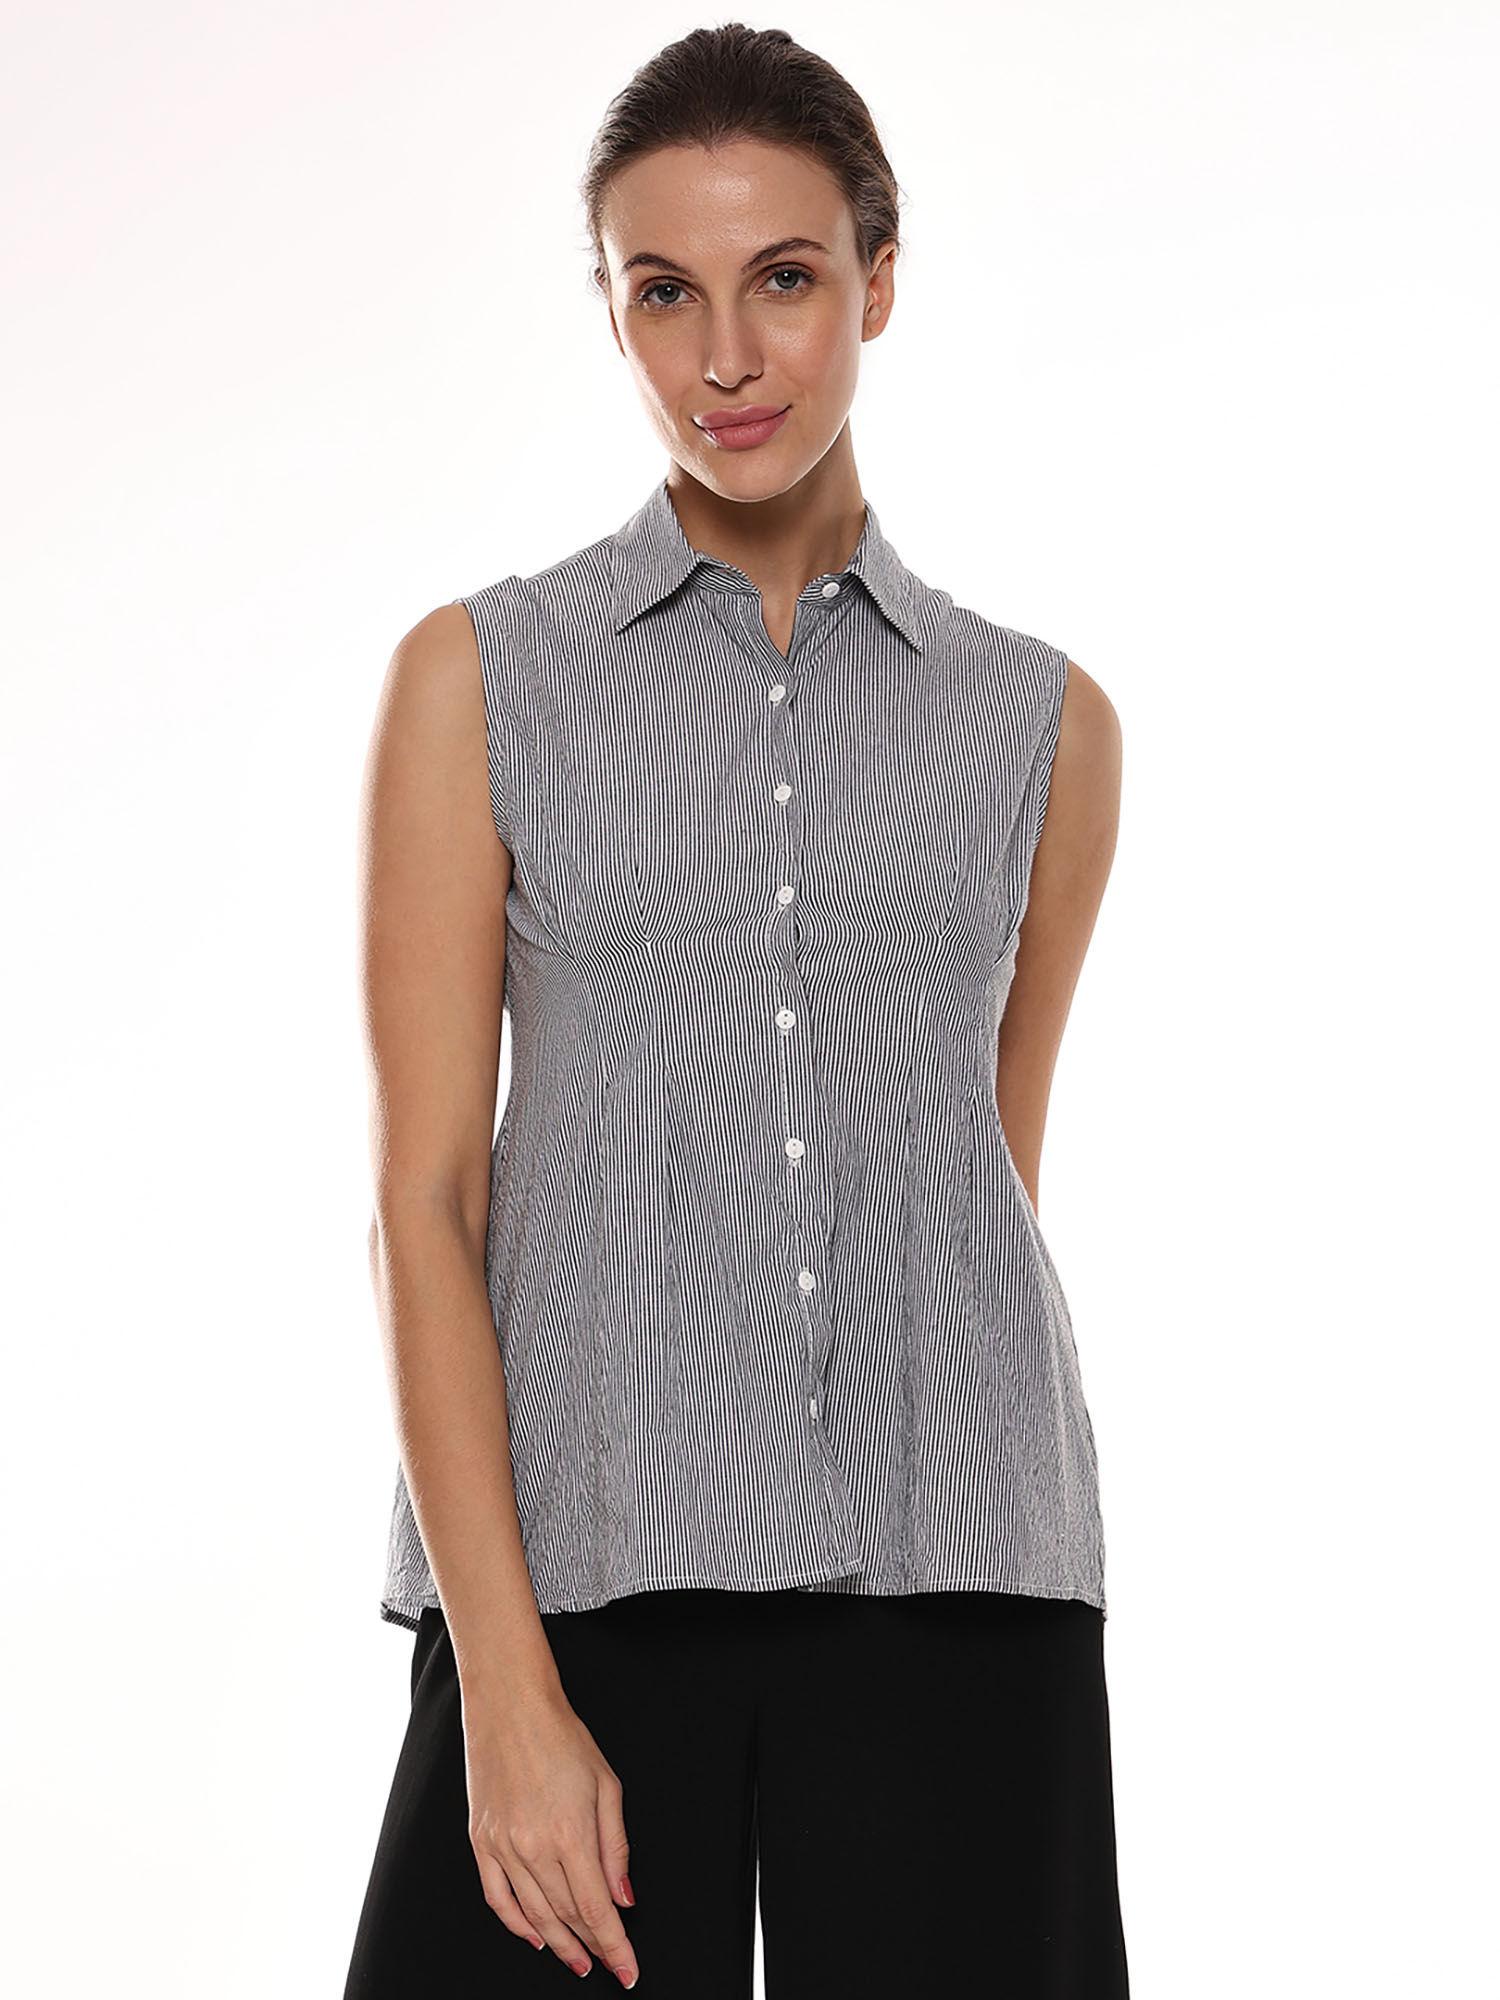 women-amora-black-&-white-striped-sleeveless-cotton-formal-shirt